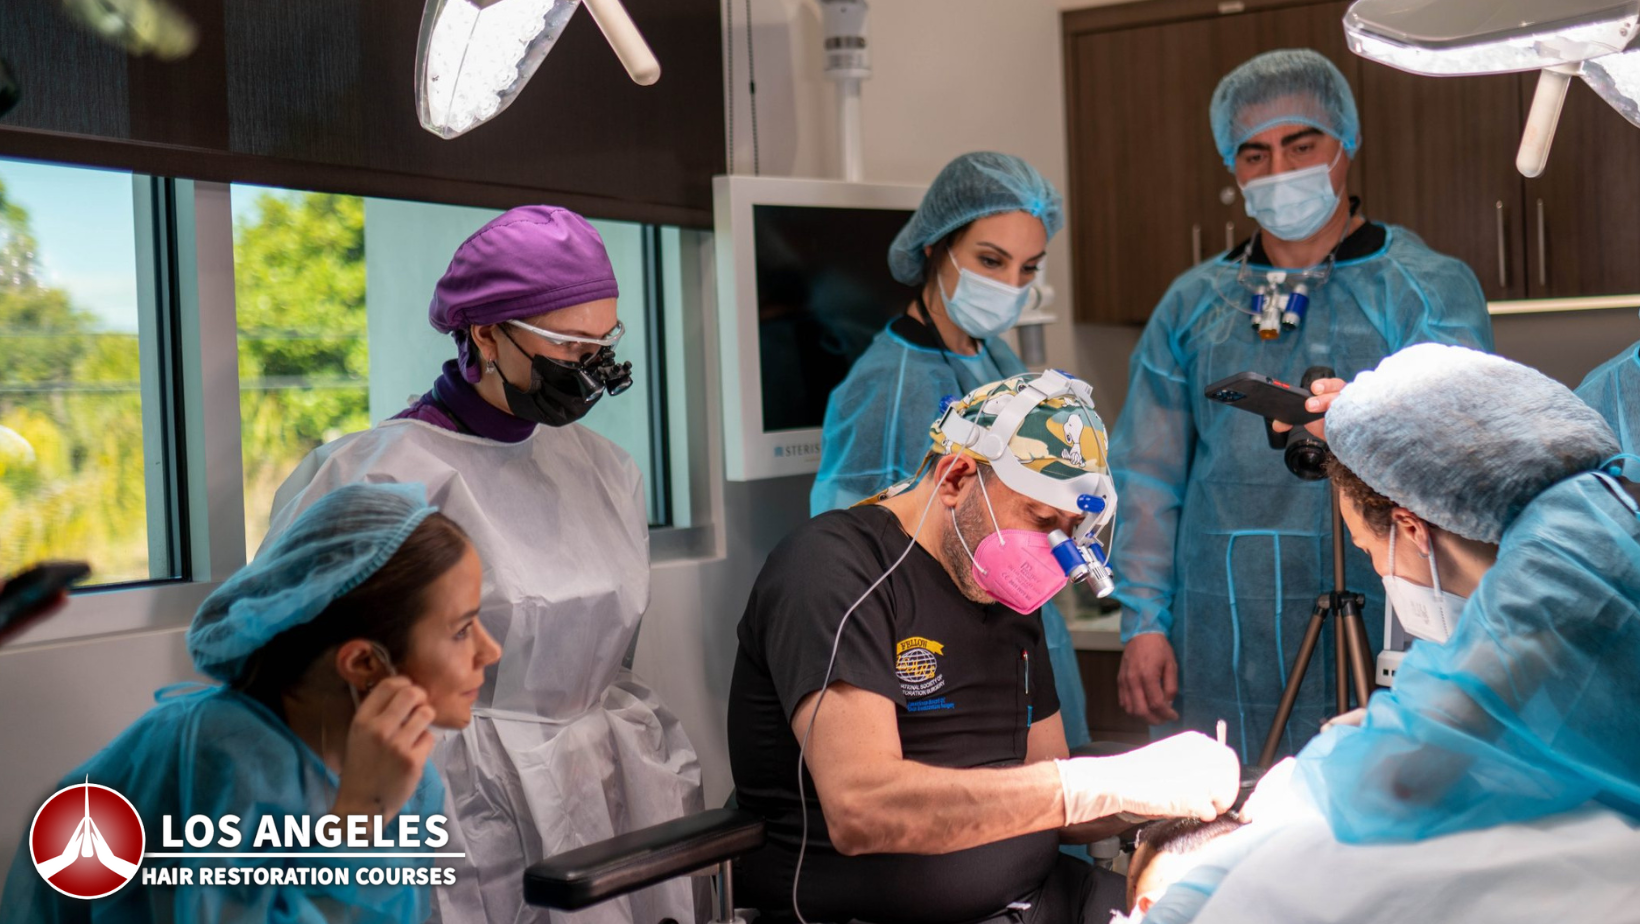 Los Angeles Hair Restoration Courses 2022 - Live Surgery Observation Hair Transplant Surgery